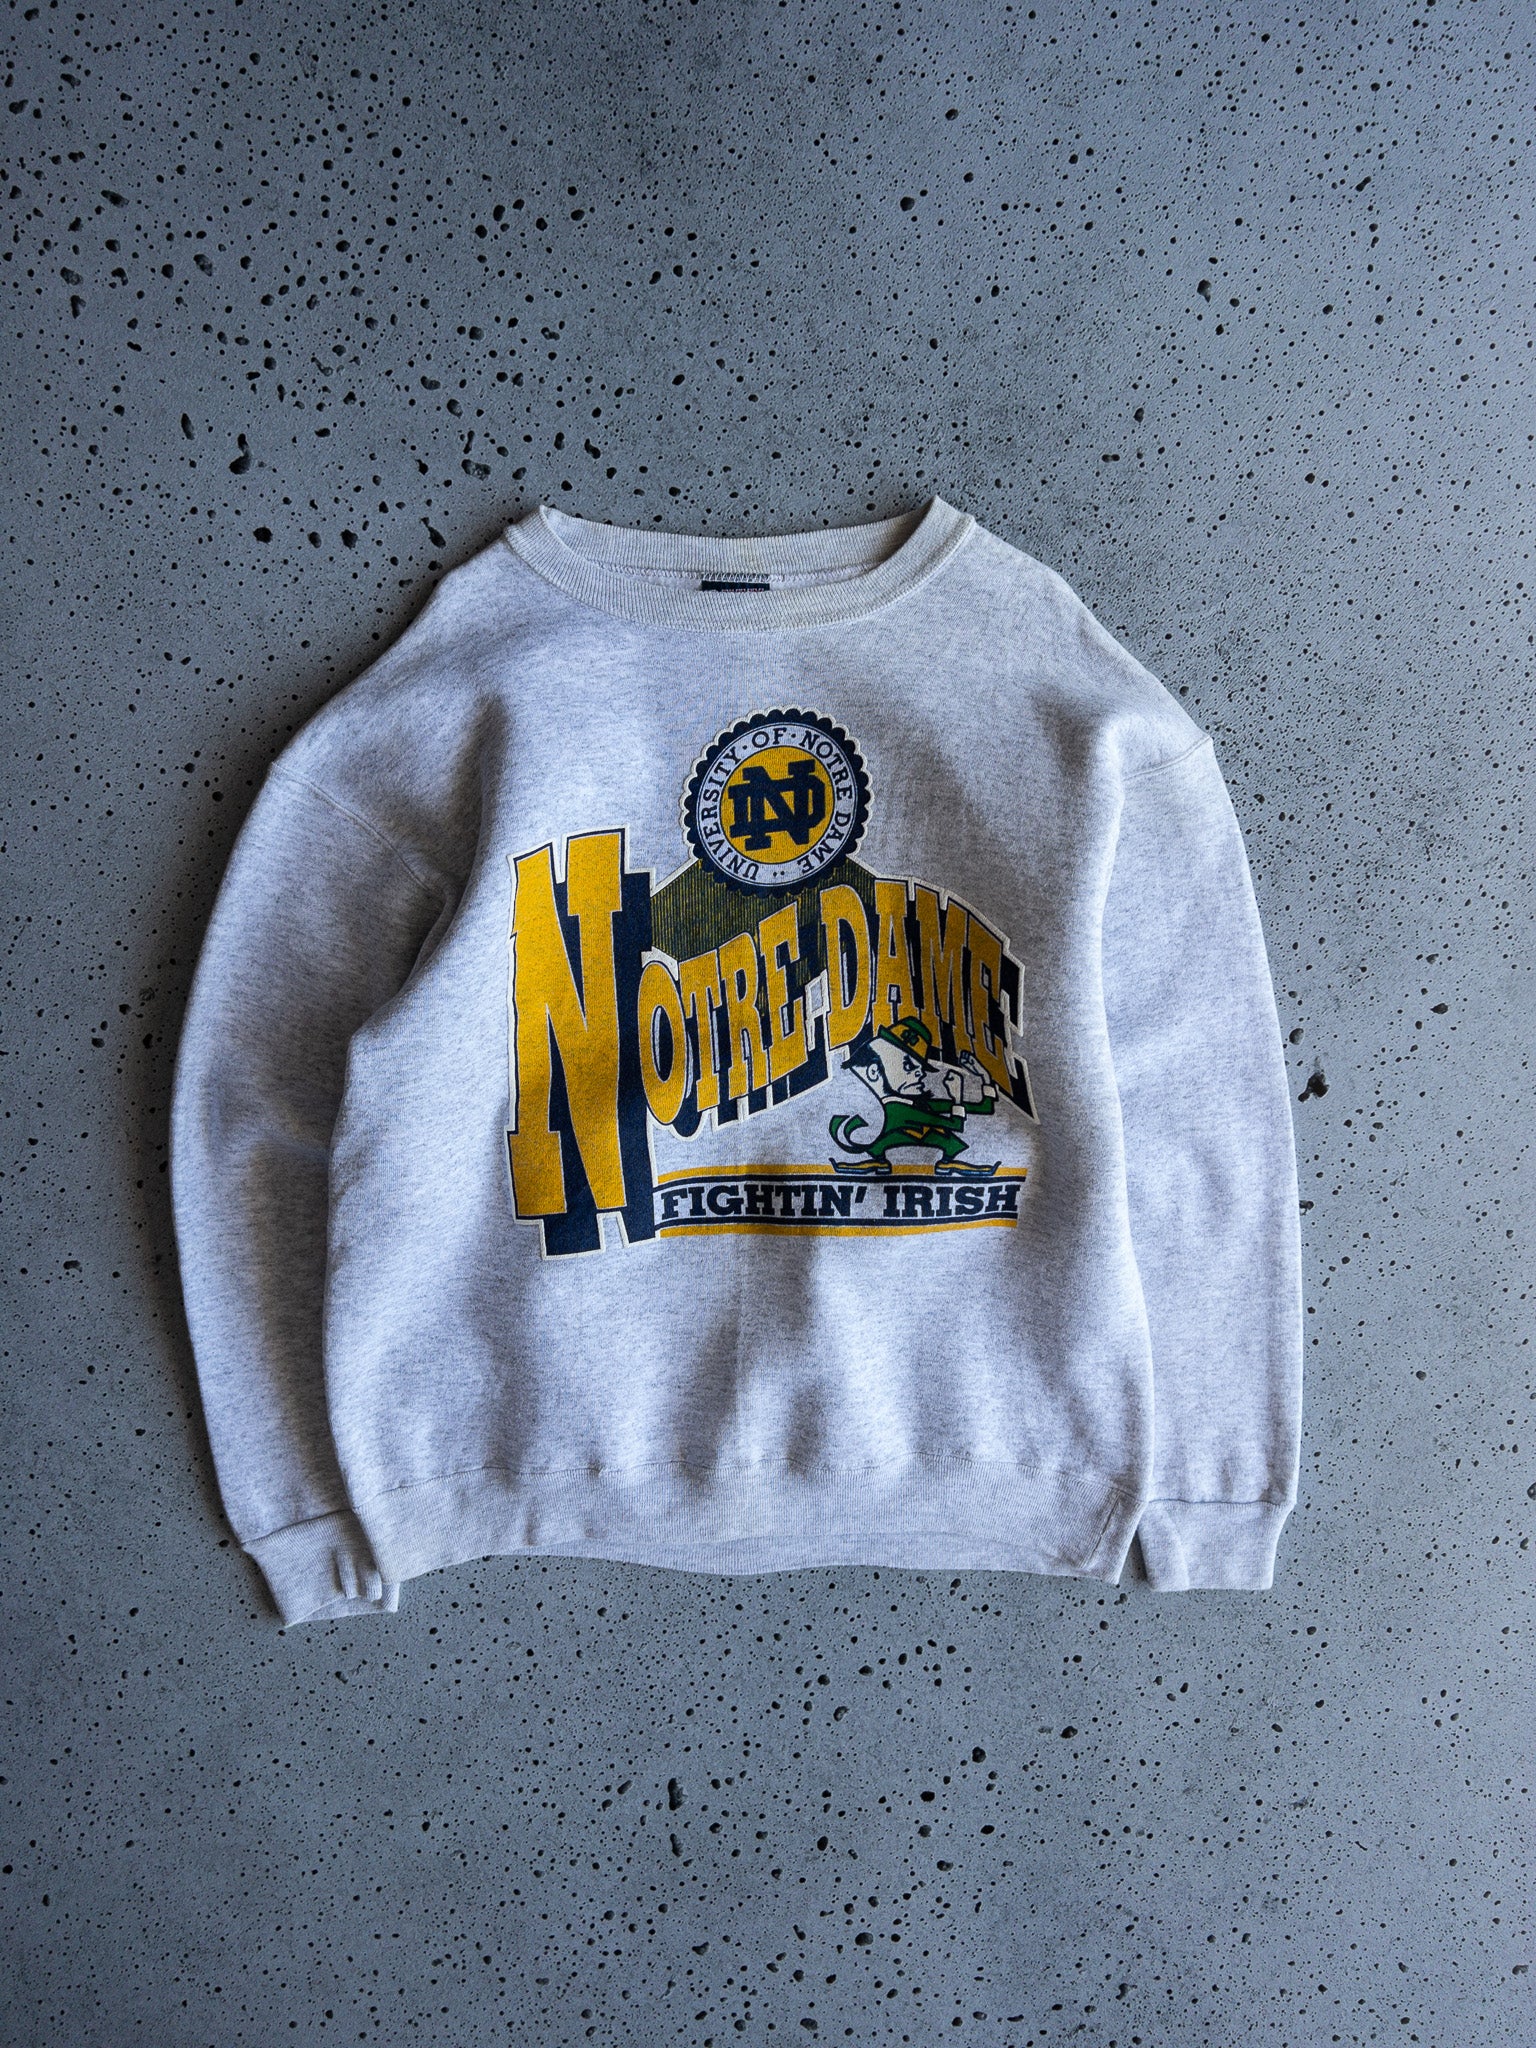 Vintage Notre Dame Fighting Irish Sweatshirt (L)